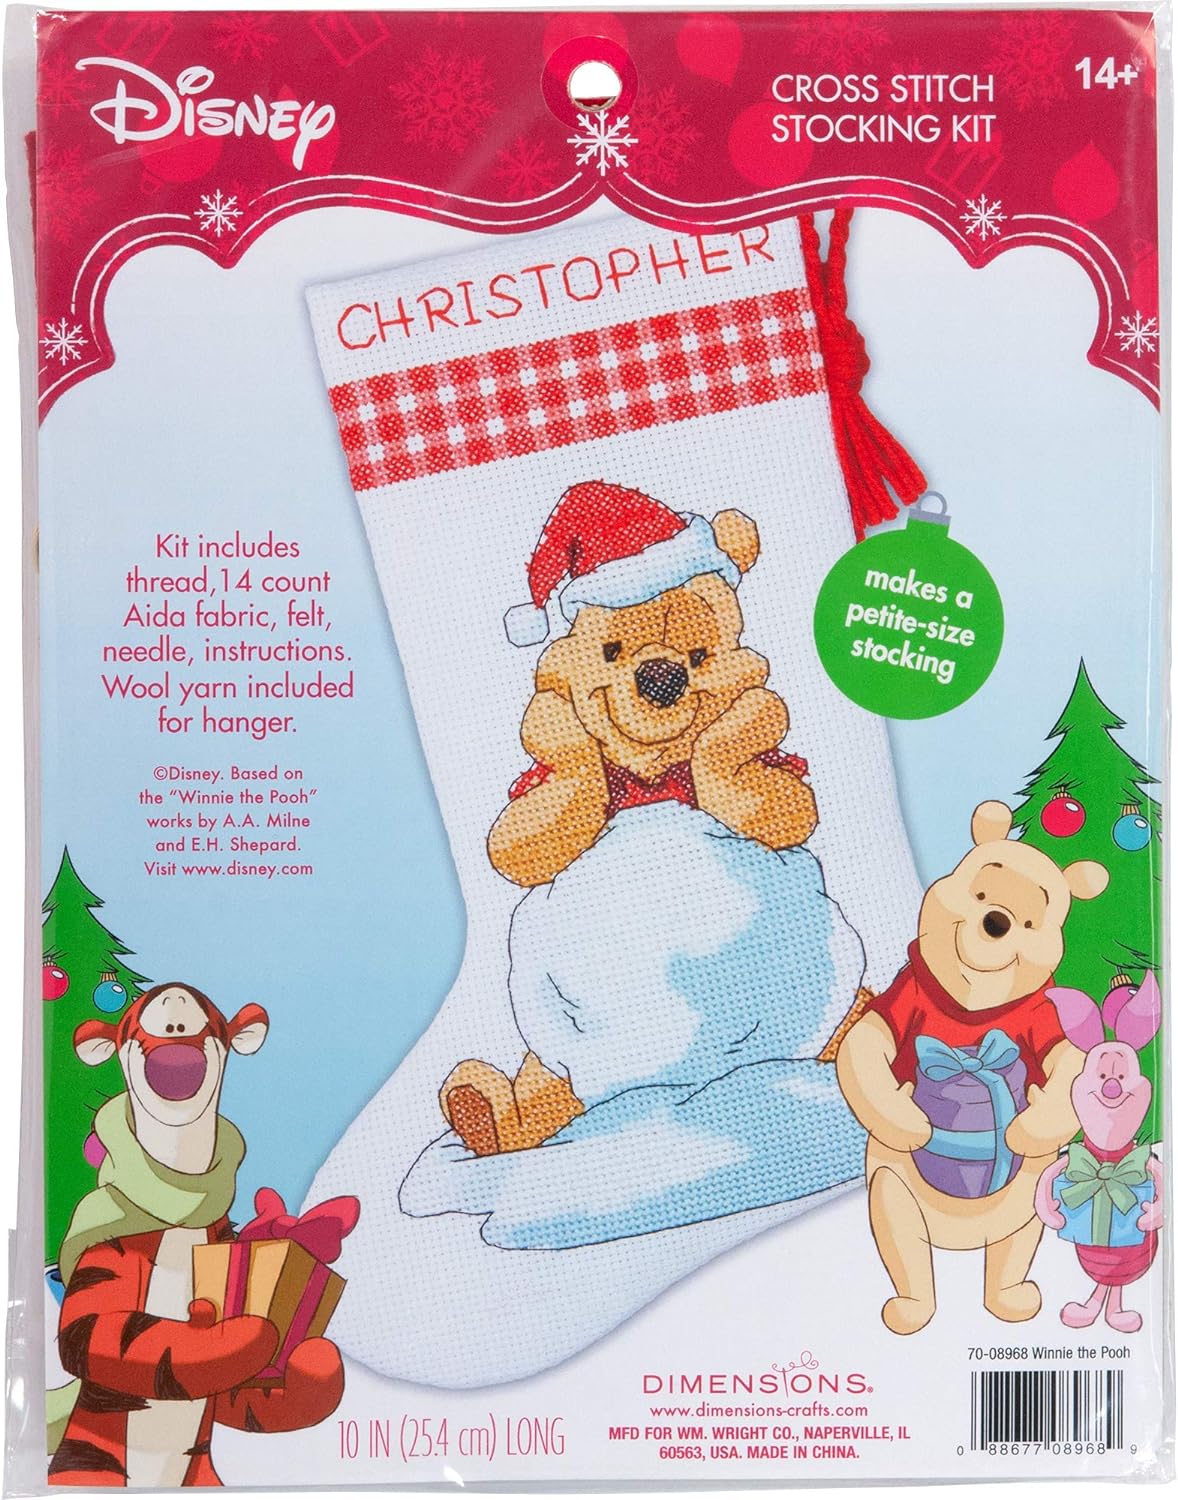 Winnie the Pooh Cross Stitch Stocking Kit: Includes: Thread, 14